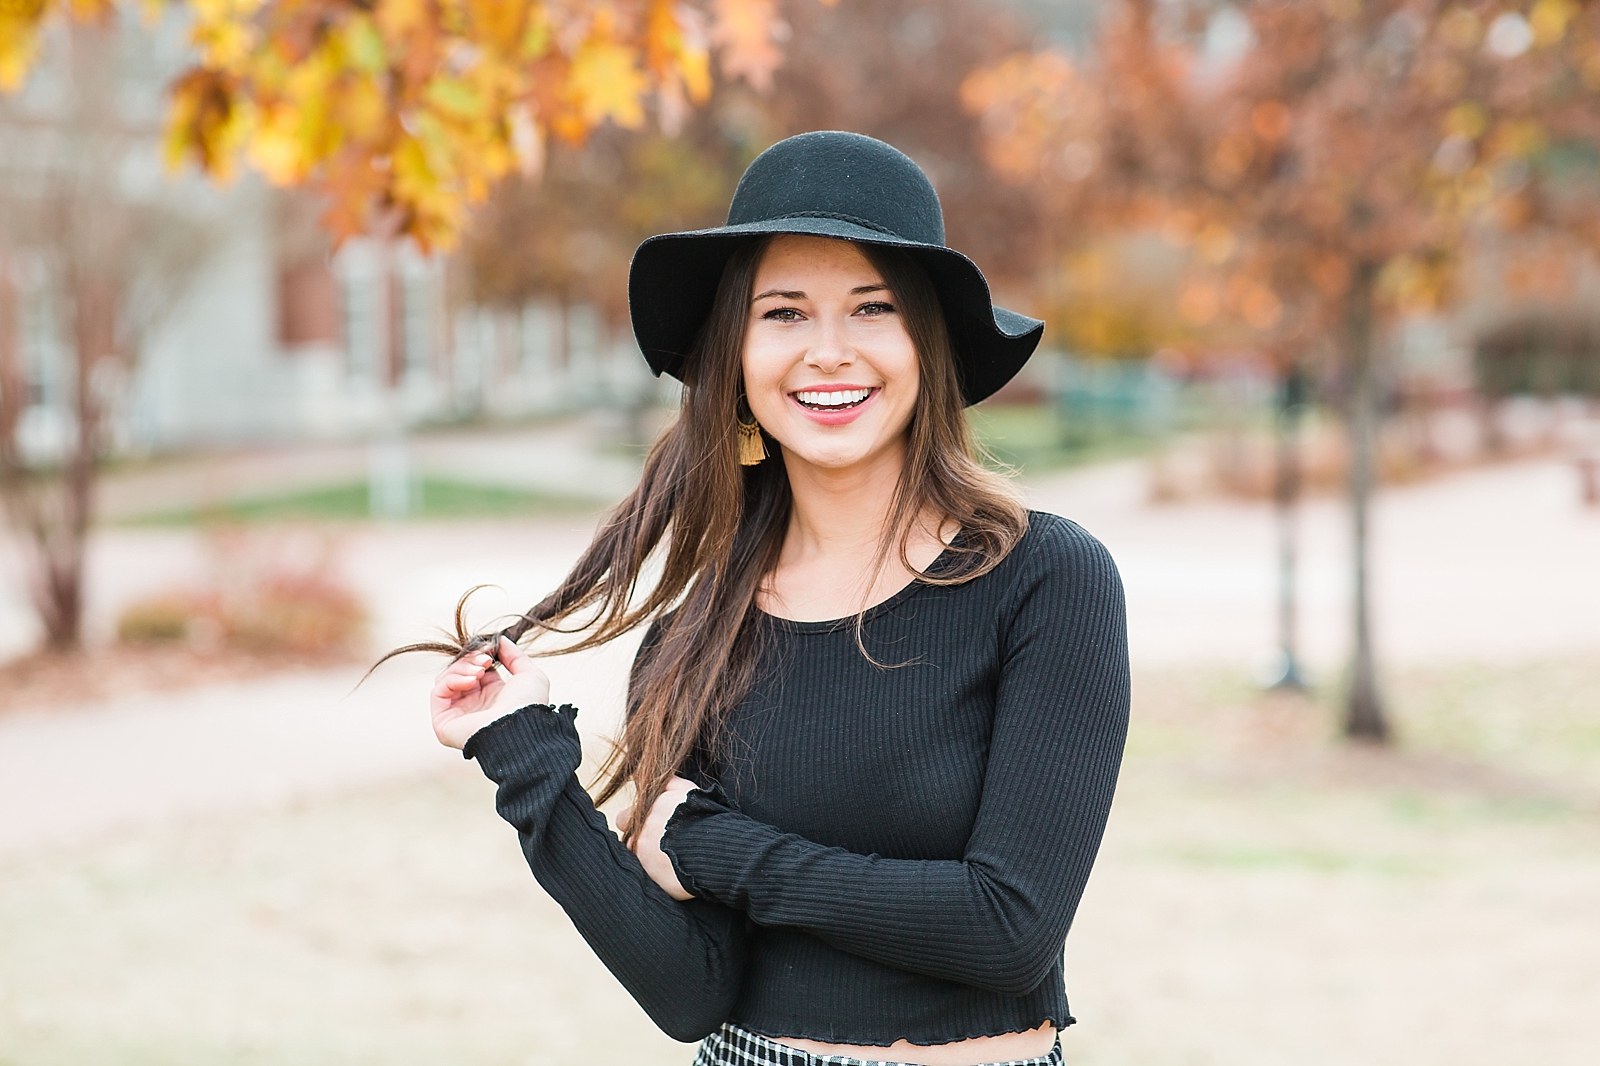 Western Carolina University Senior Sierra twirling her hair smiling at the camera Photo